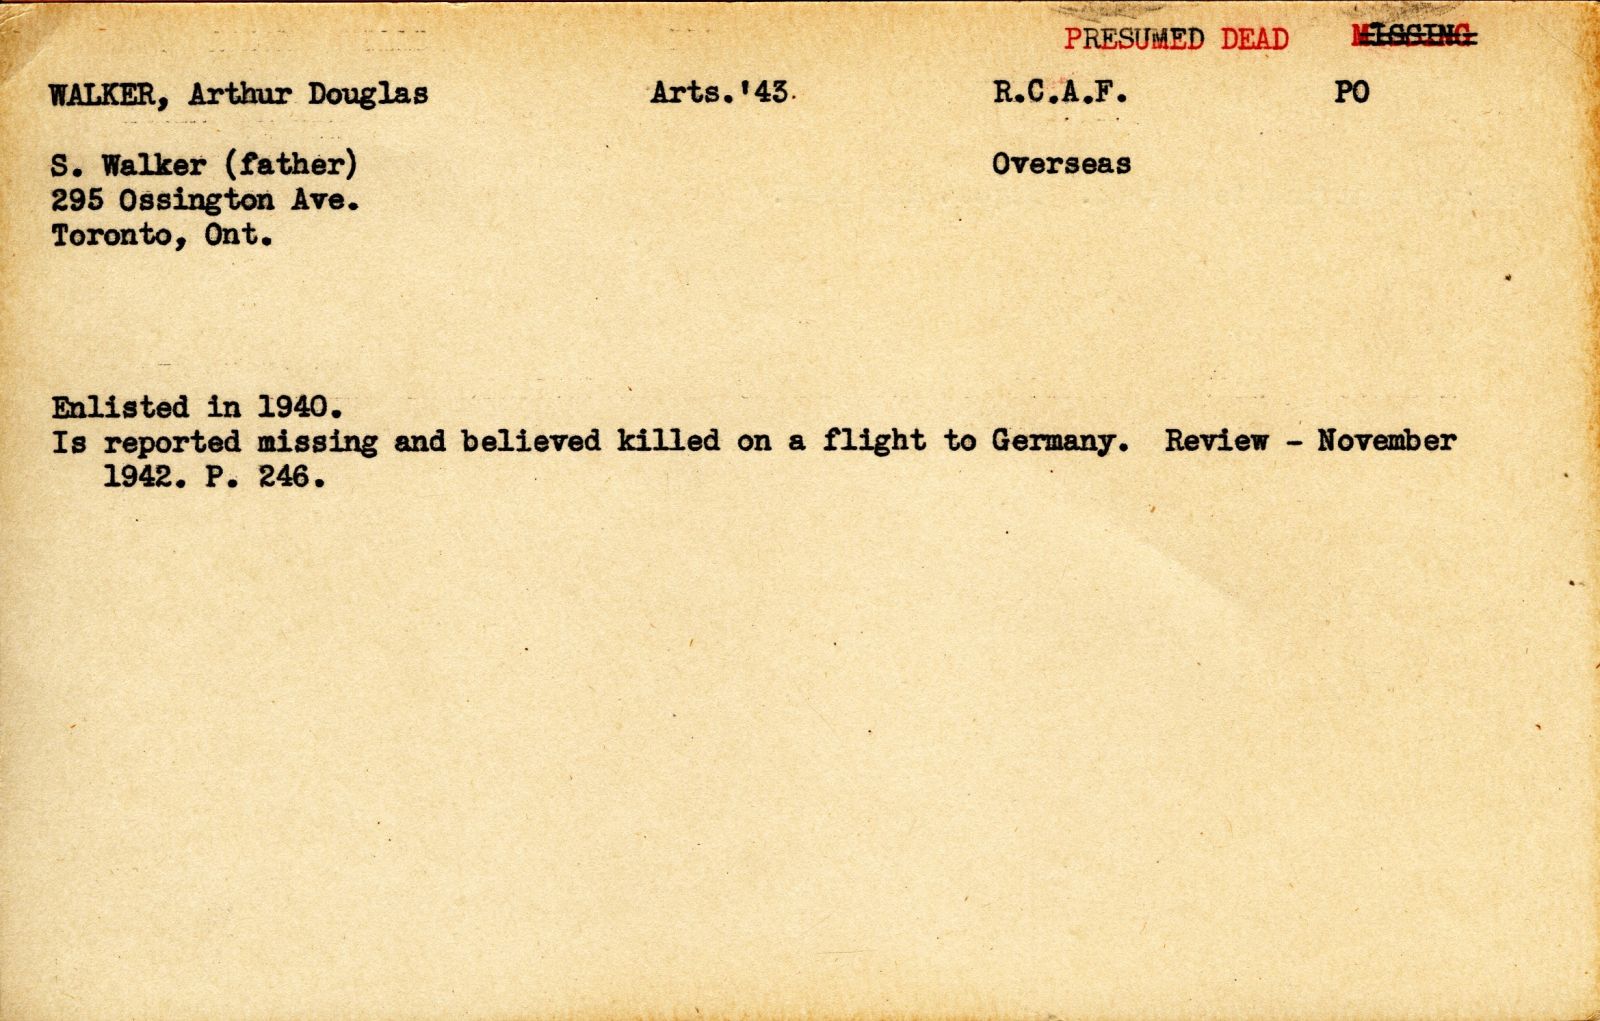 "Service card for Arthur Douglas Walker page 1"